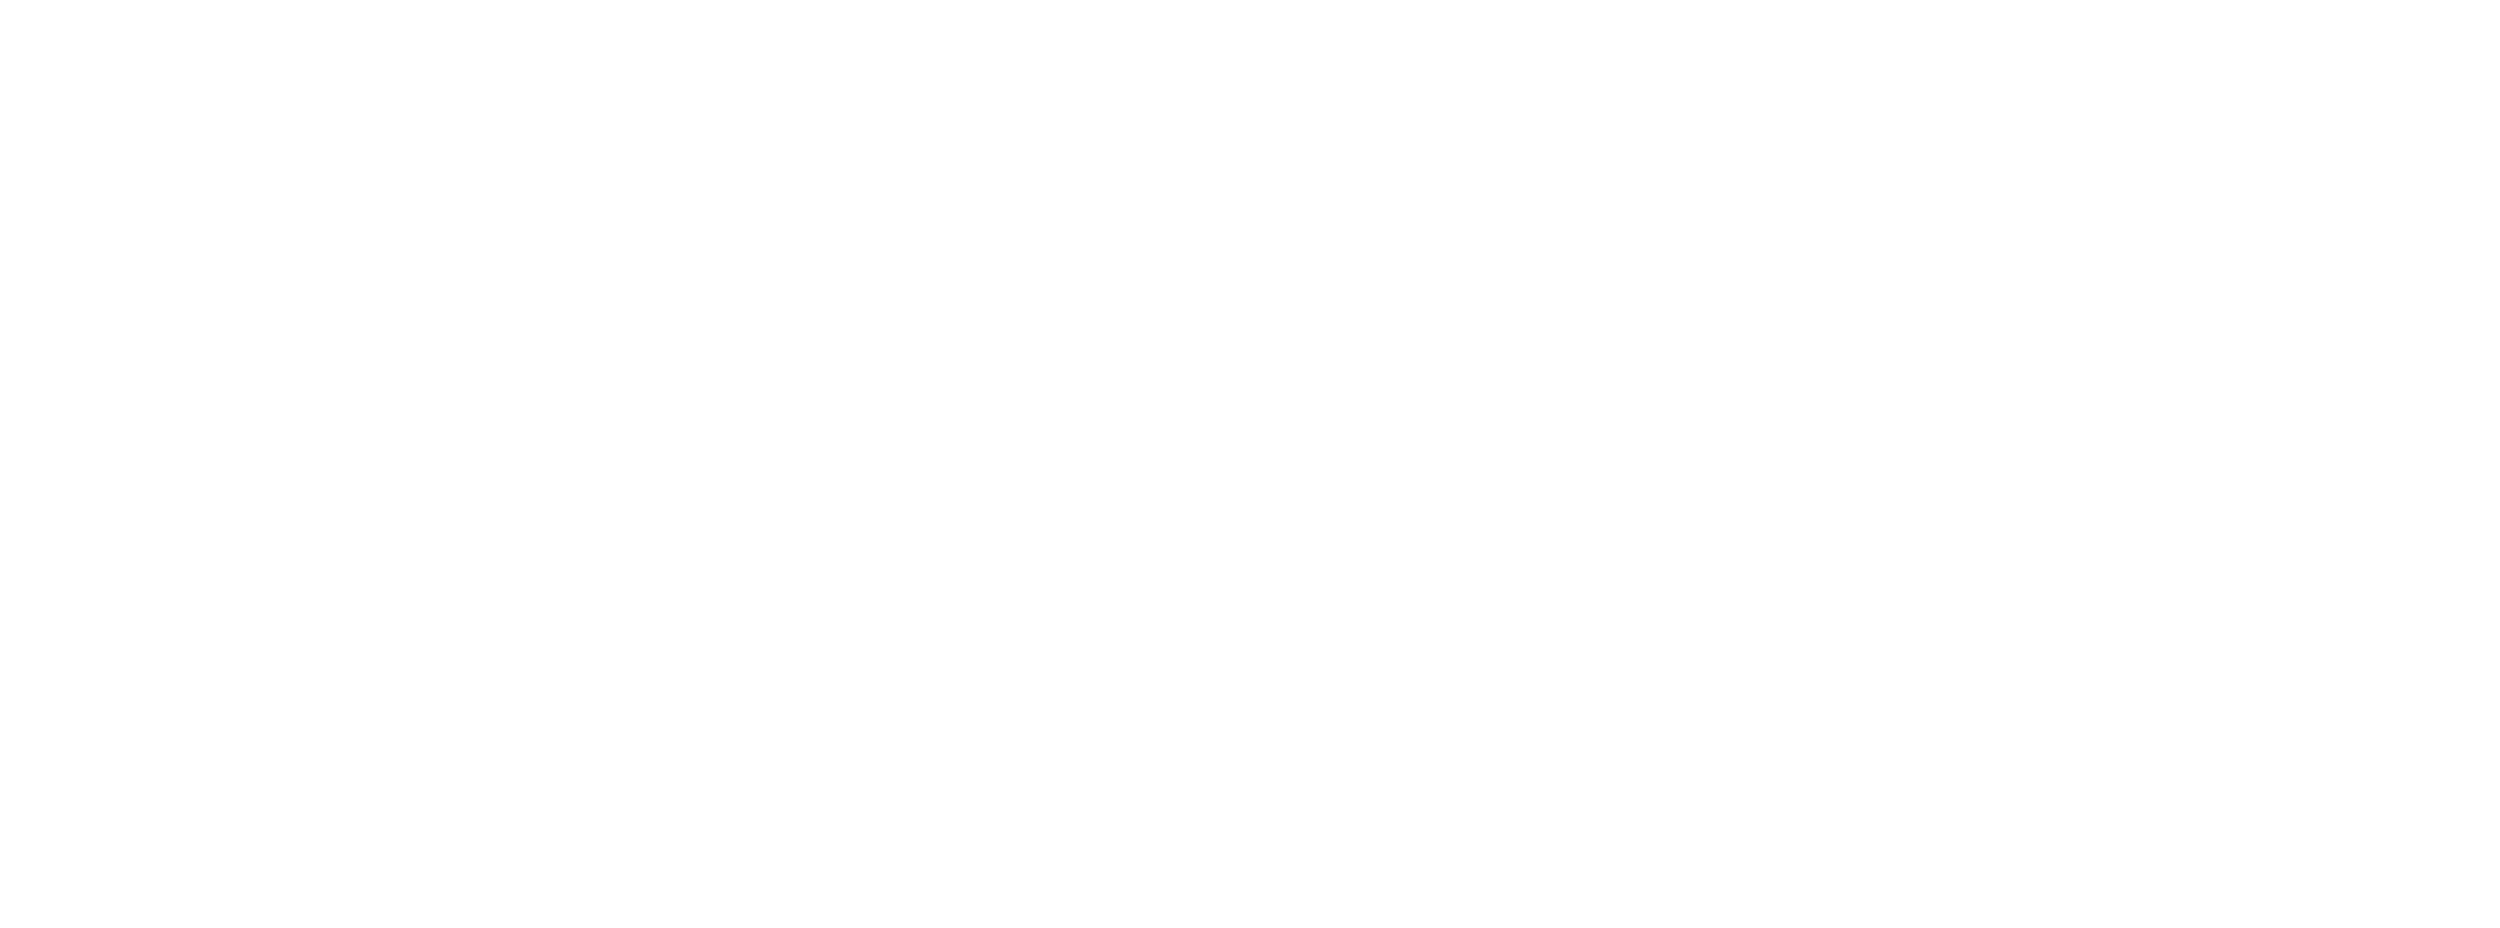 CHamsys-Logo-white.png